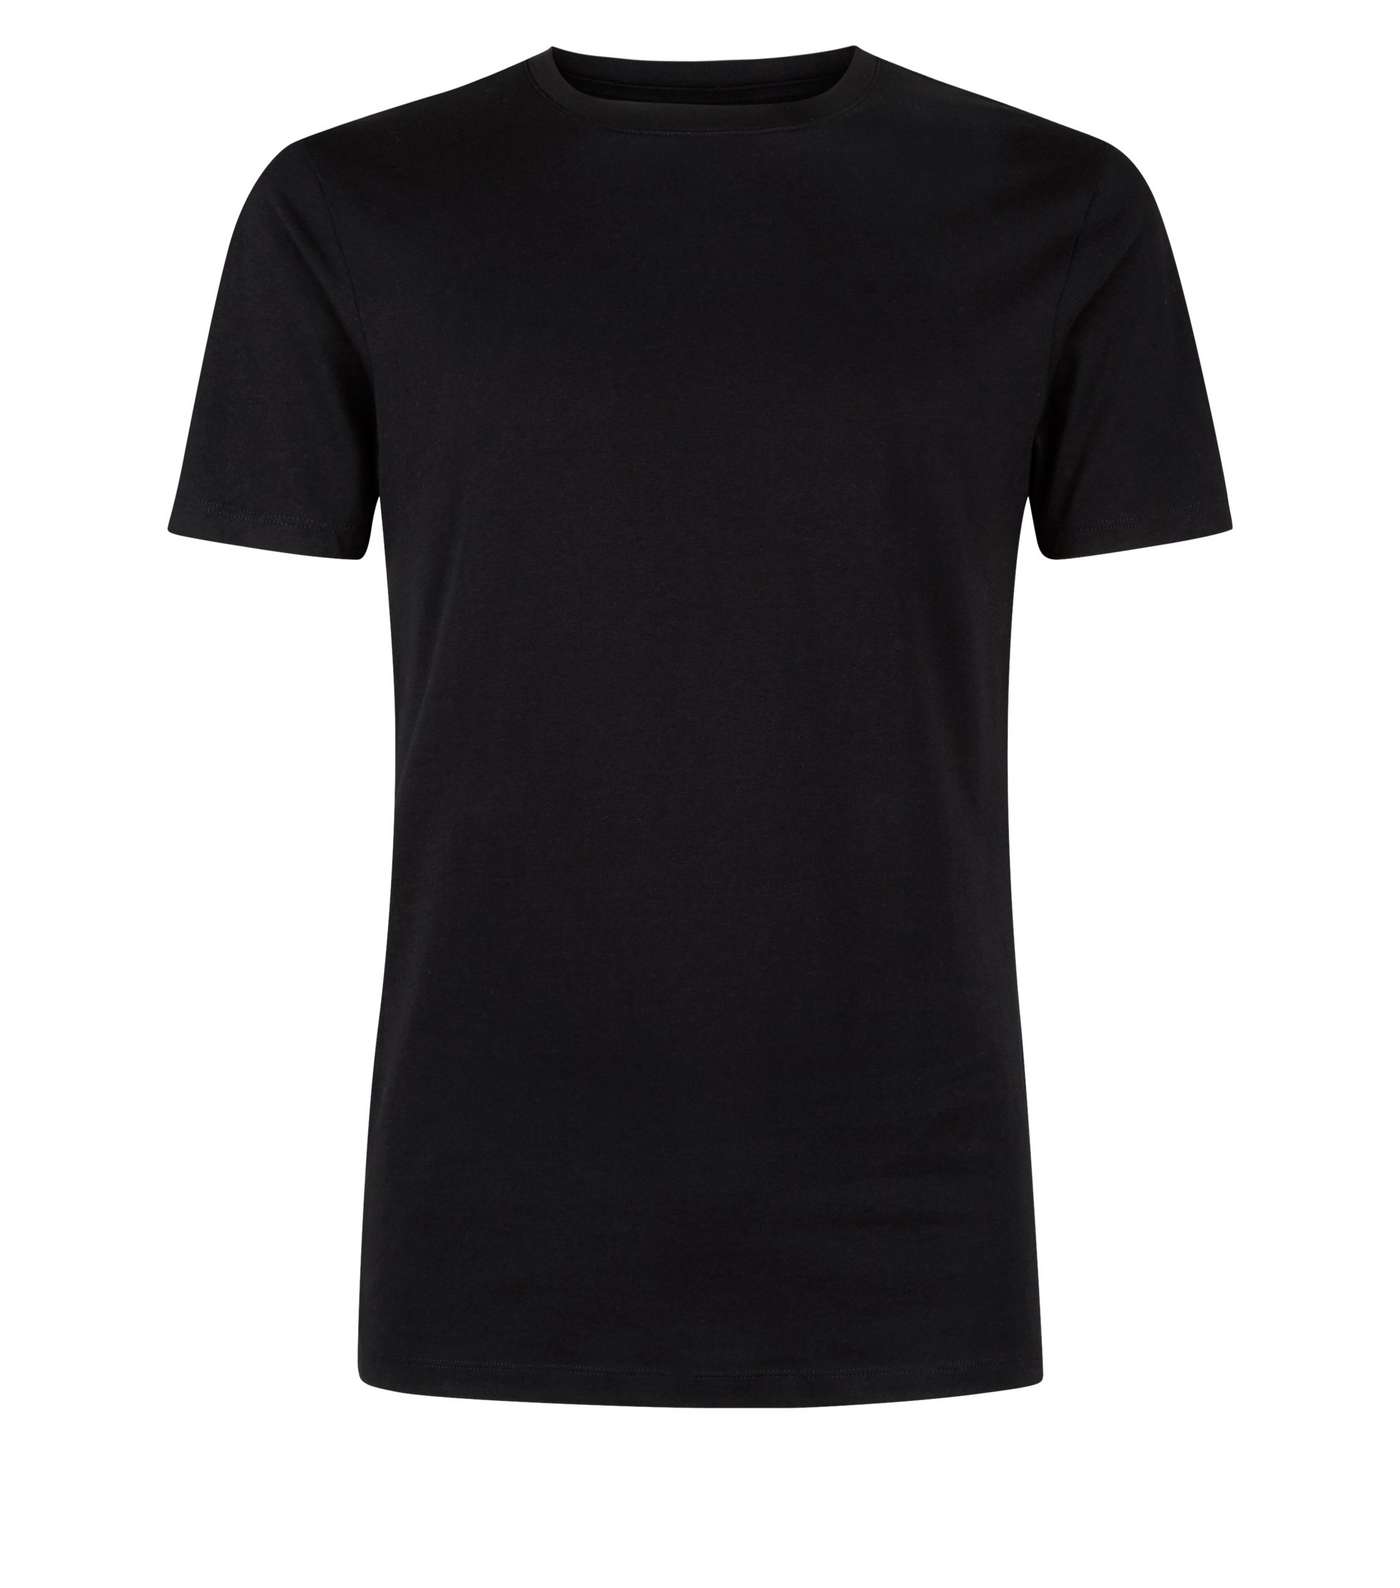 Black Muscle Fit T-Shirt Image 4